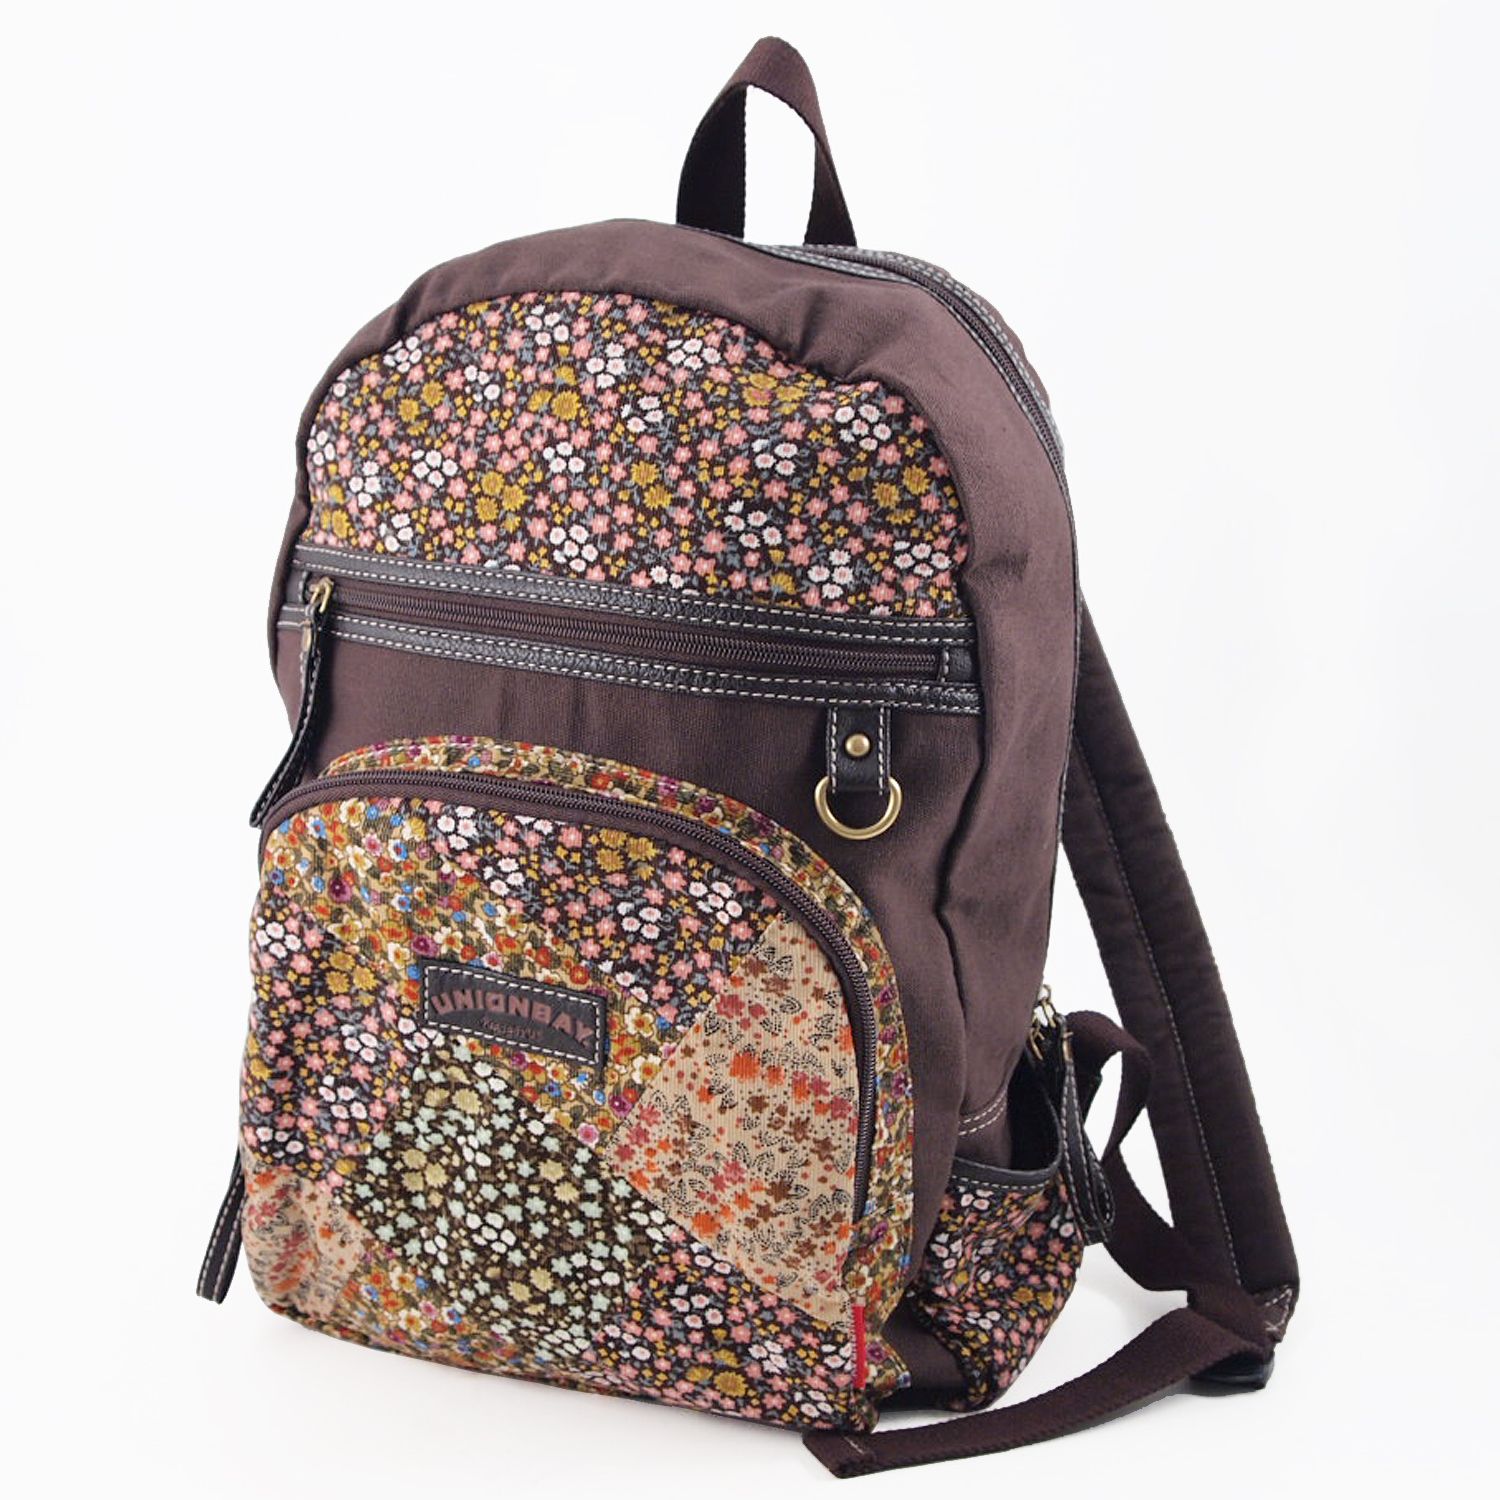 Unionbay Backpack Synthetics Shoulder Bag Patch Multicolor